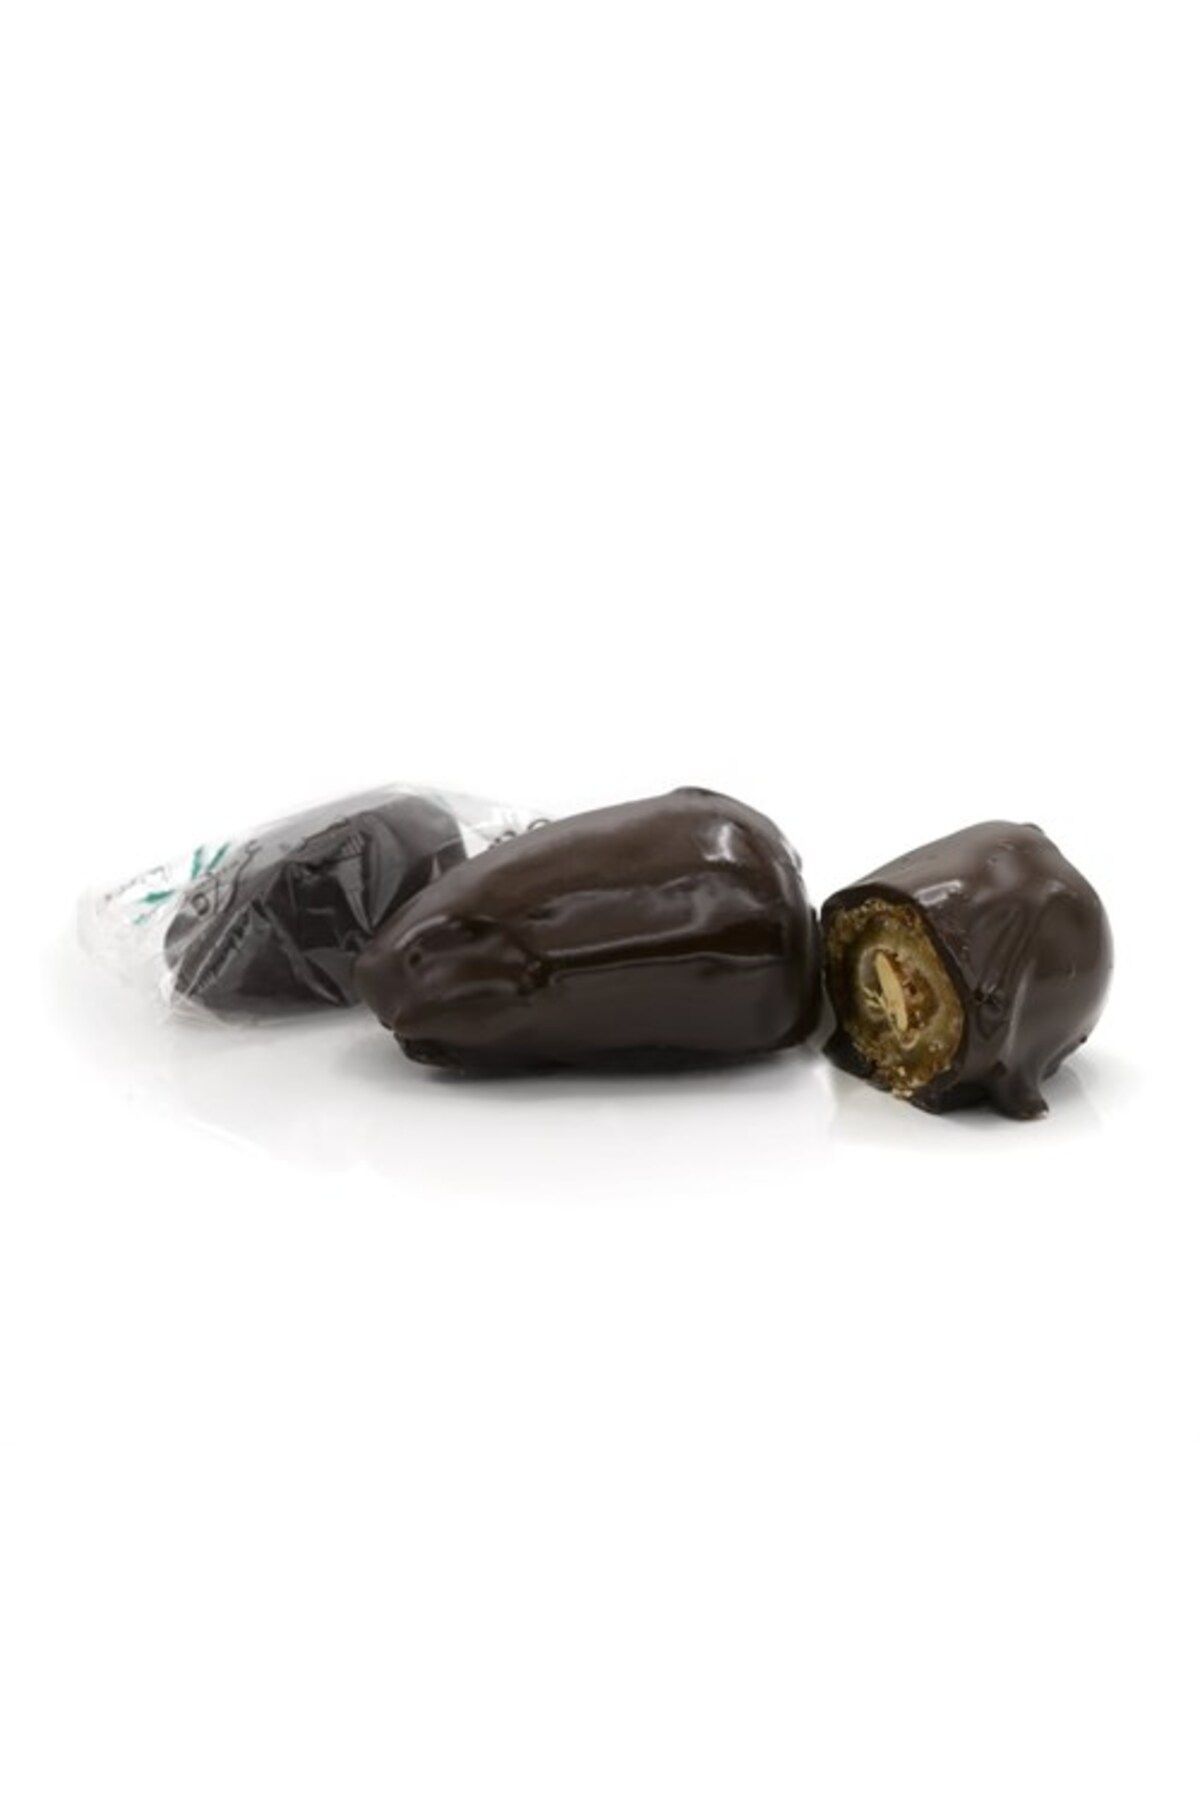 Adnan Efendi Çikolatalı Bademli Hurma - 250 Gr